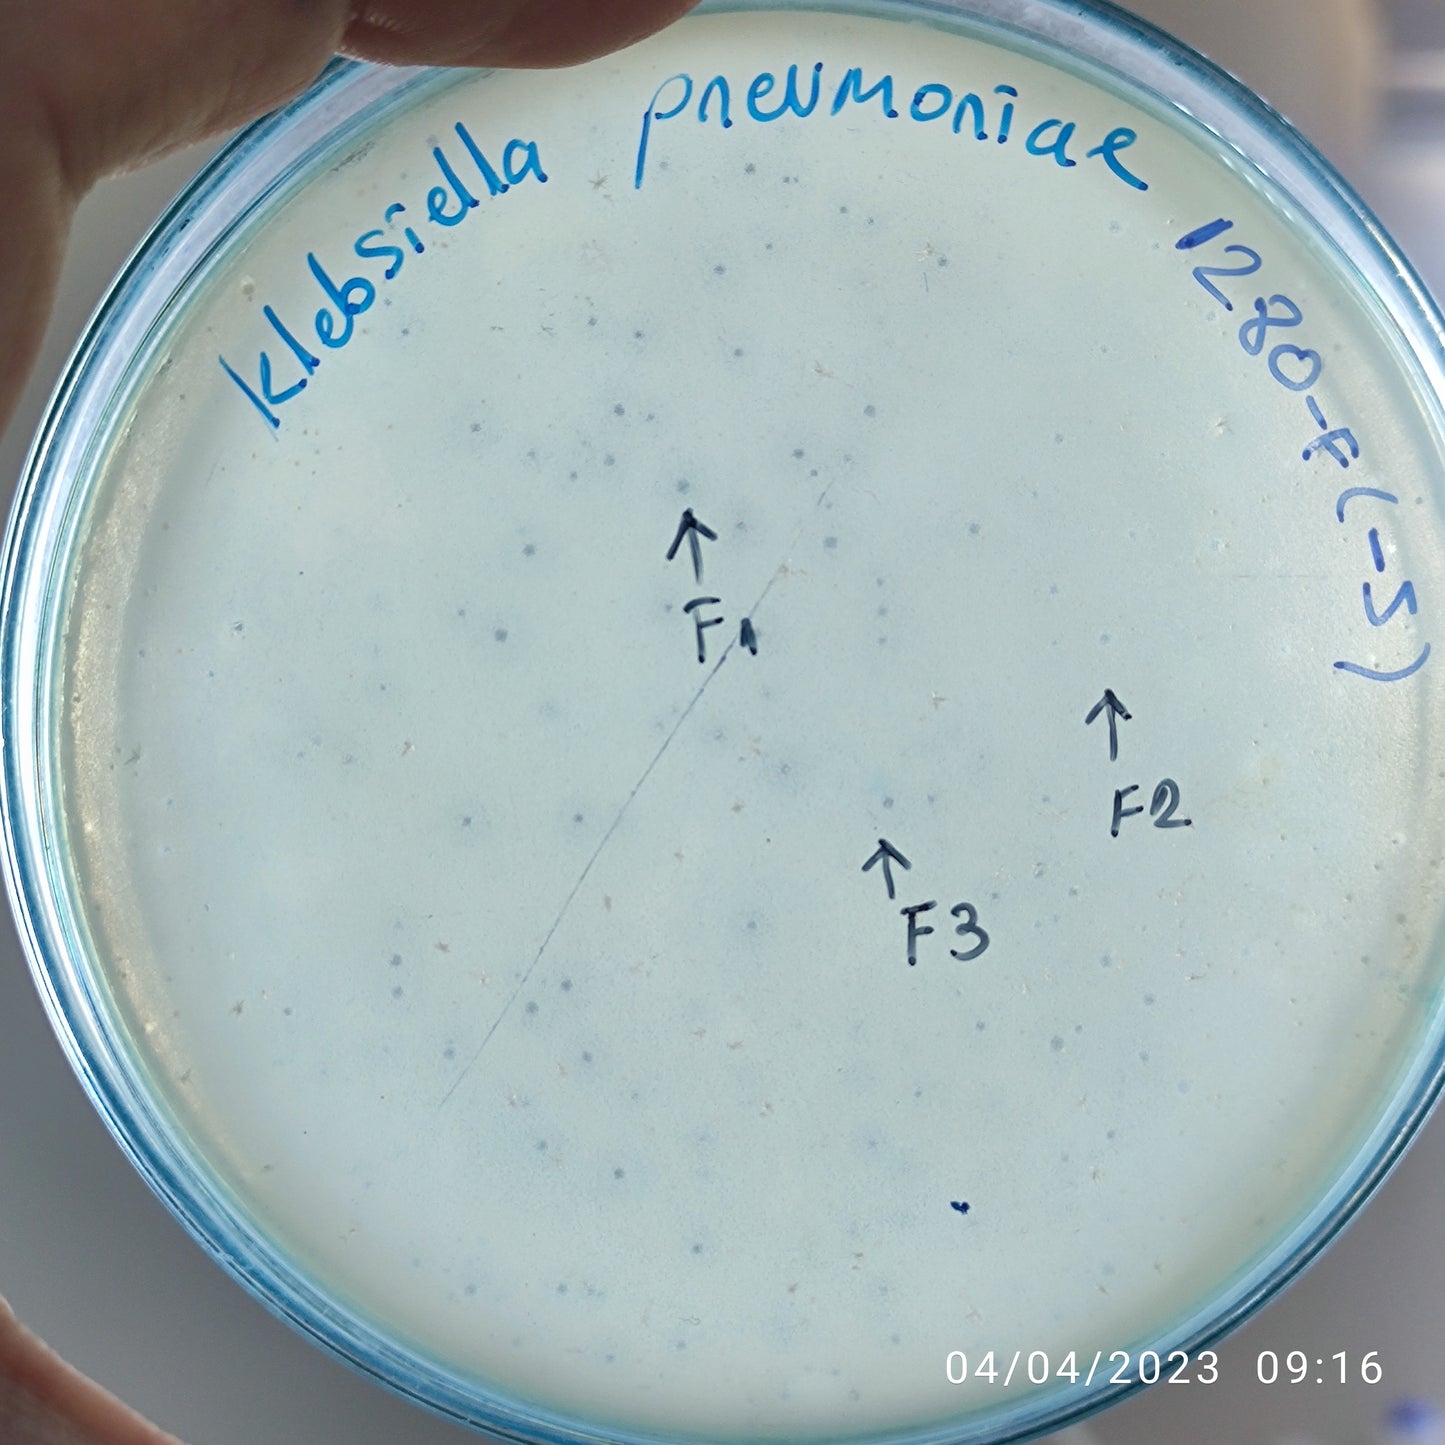 Klebsiella pneumoniae bacteriophage 181280F